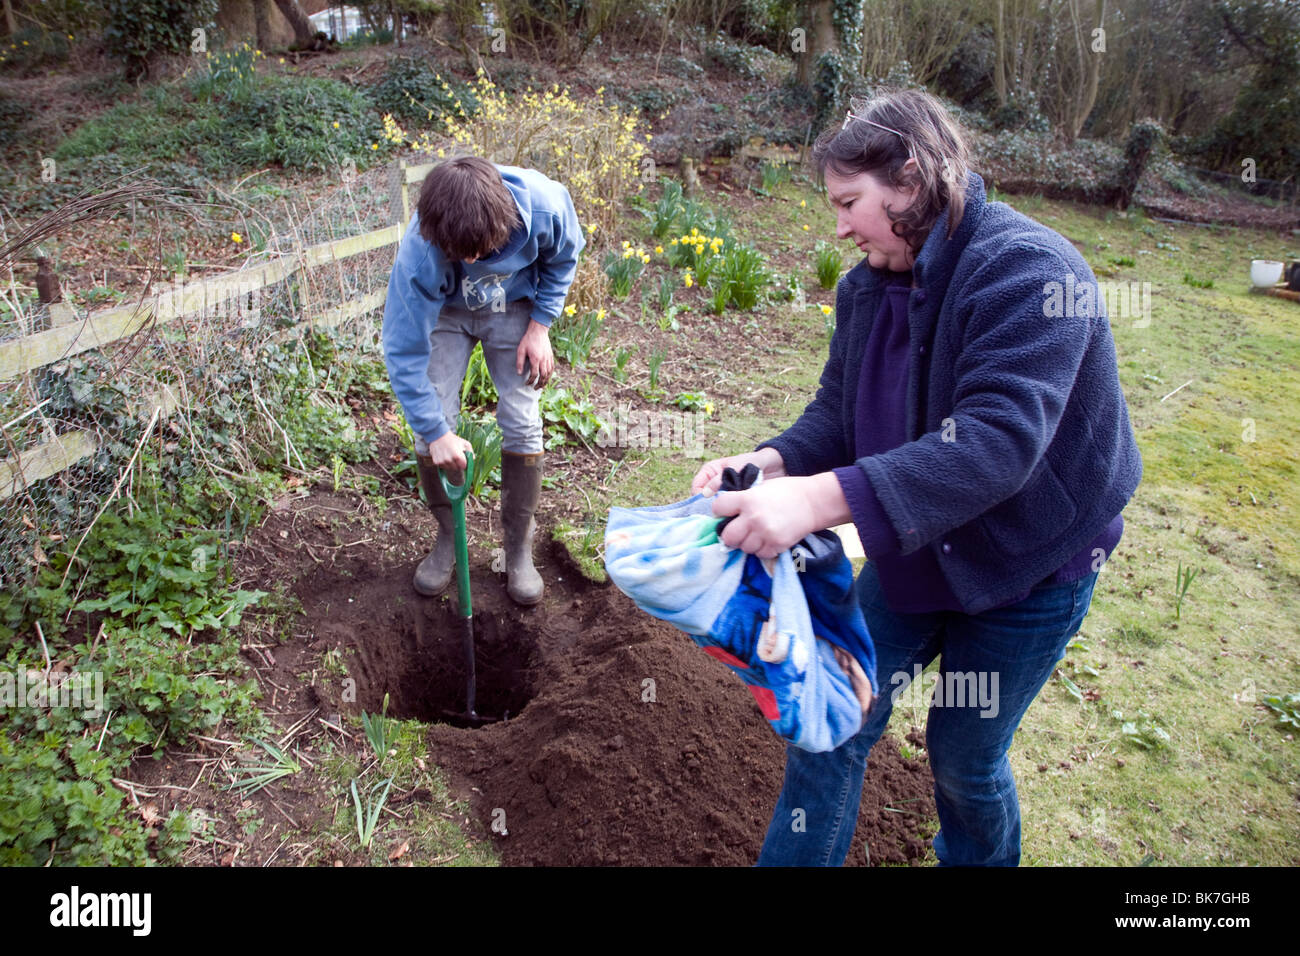 Model released teenage boy digging hole in garden to bury ...